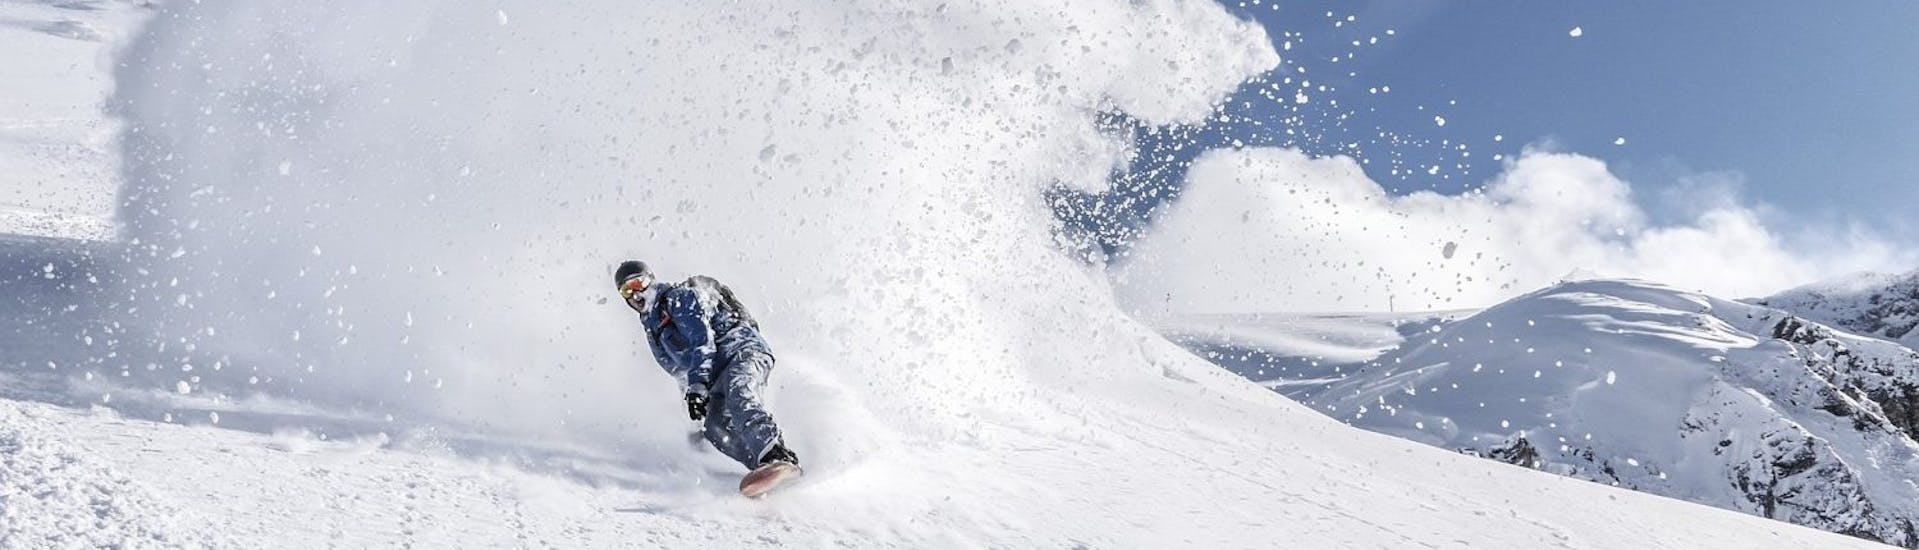 Lezioni private di Snowboard a partire da 9 anni per tutti i livelli.